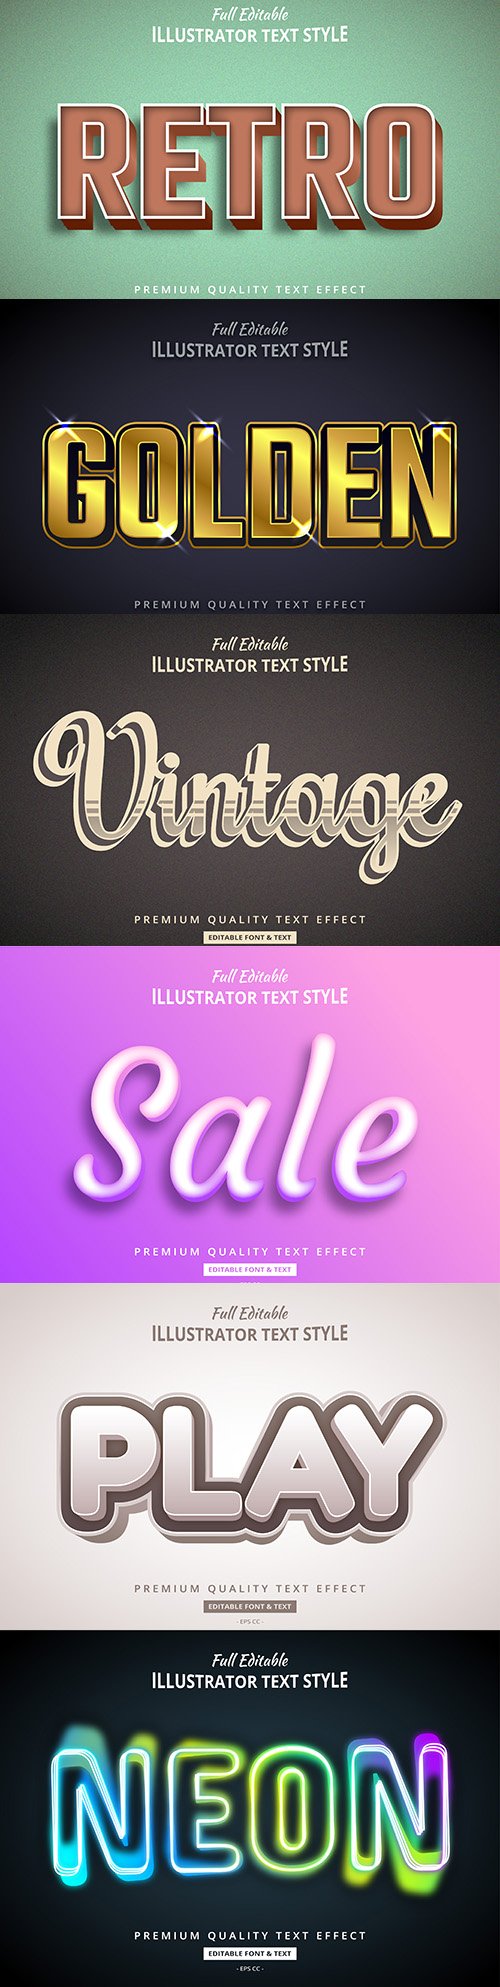 Editable font effect text collection illustration design 55